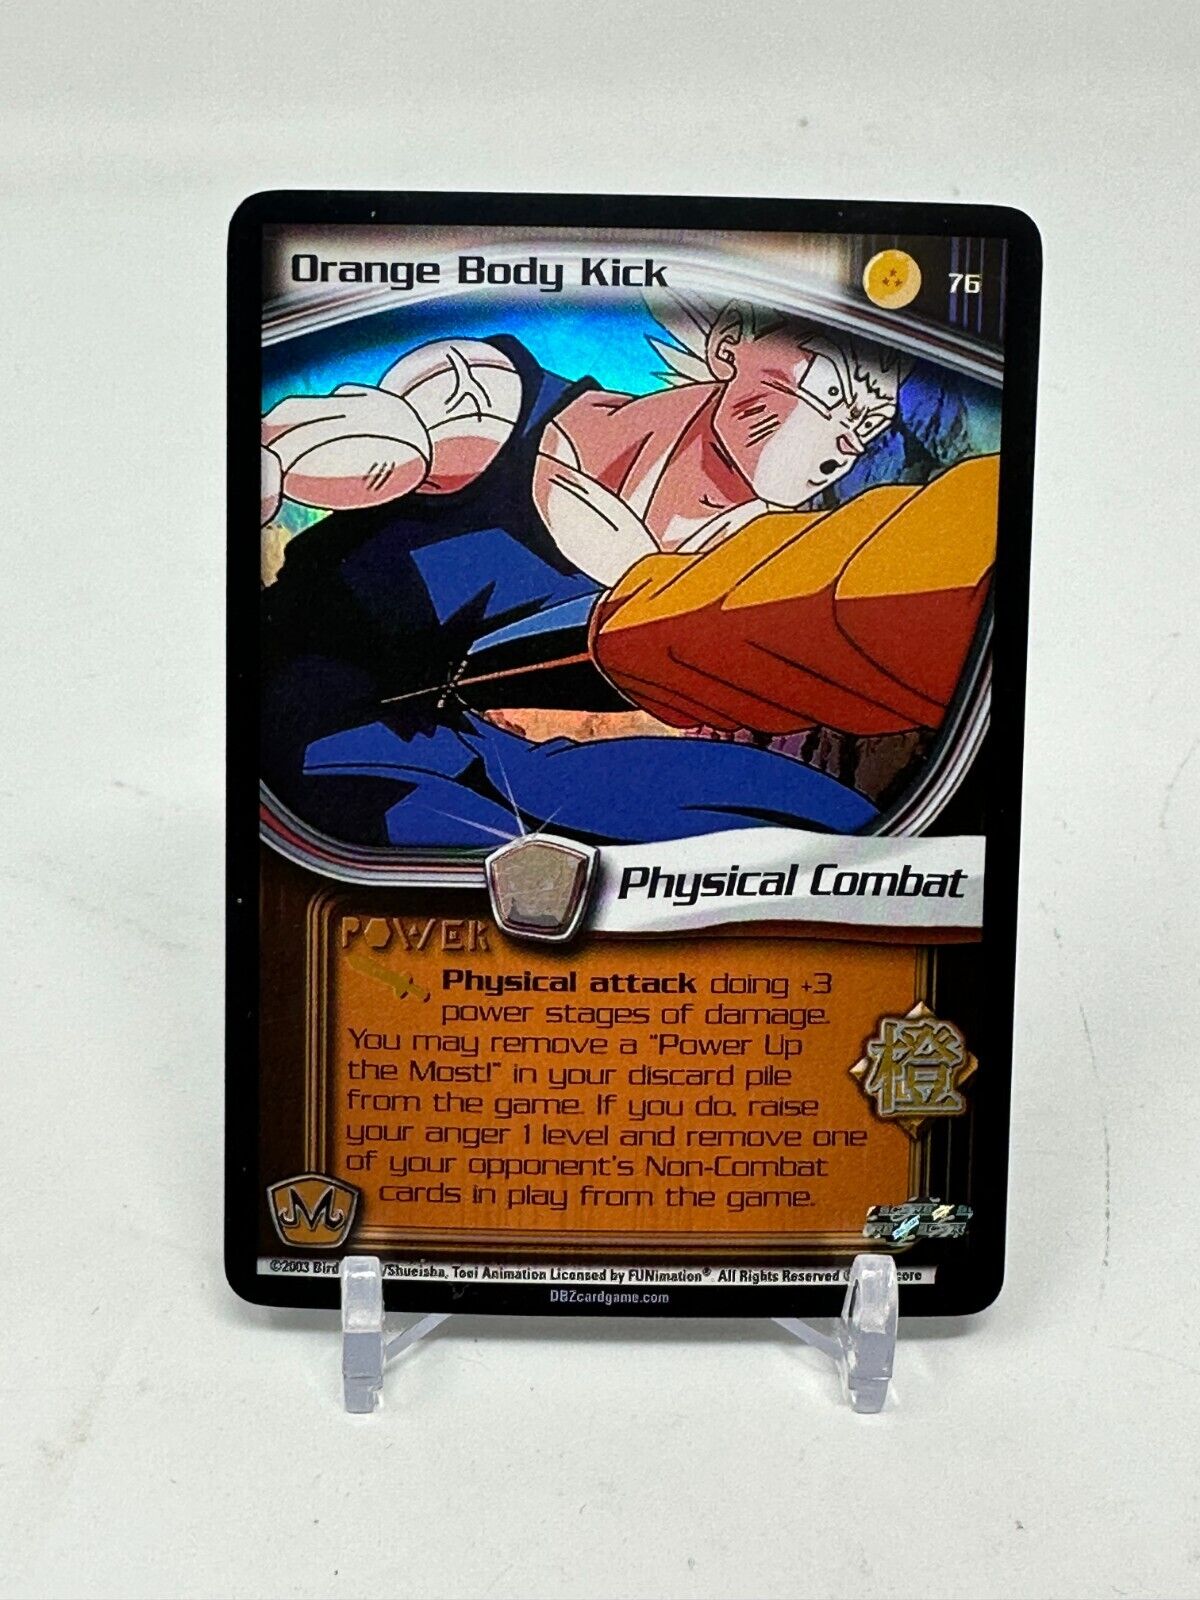 2003 Bird Studio DragonBall Z Orange Body Kick Holo Card #76